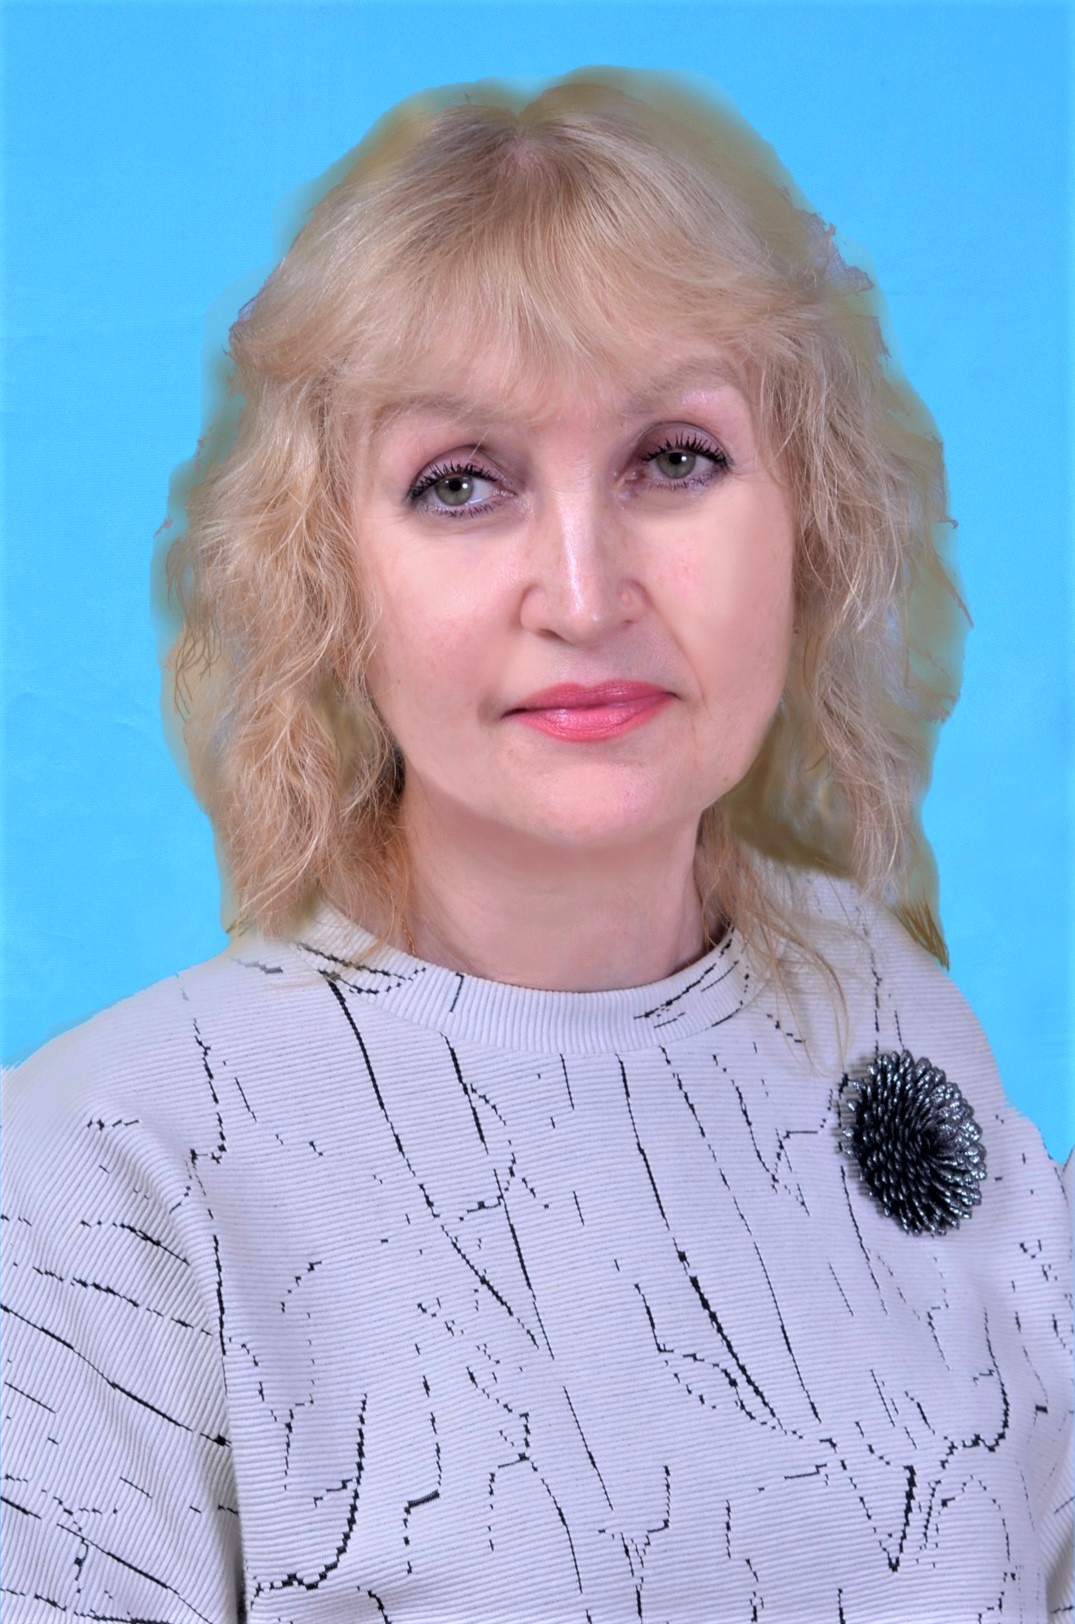 Шевченко Людмила Николаевна.